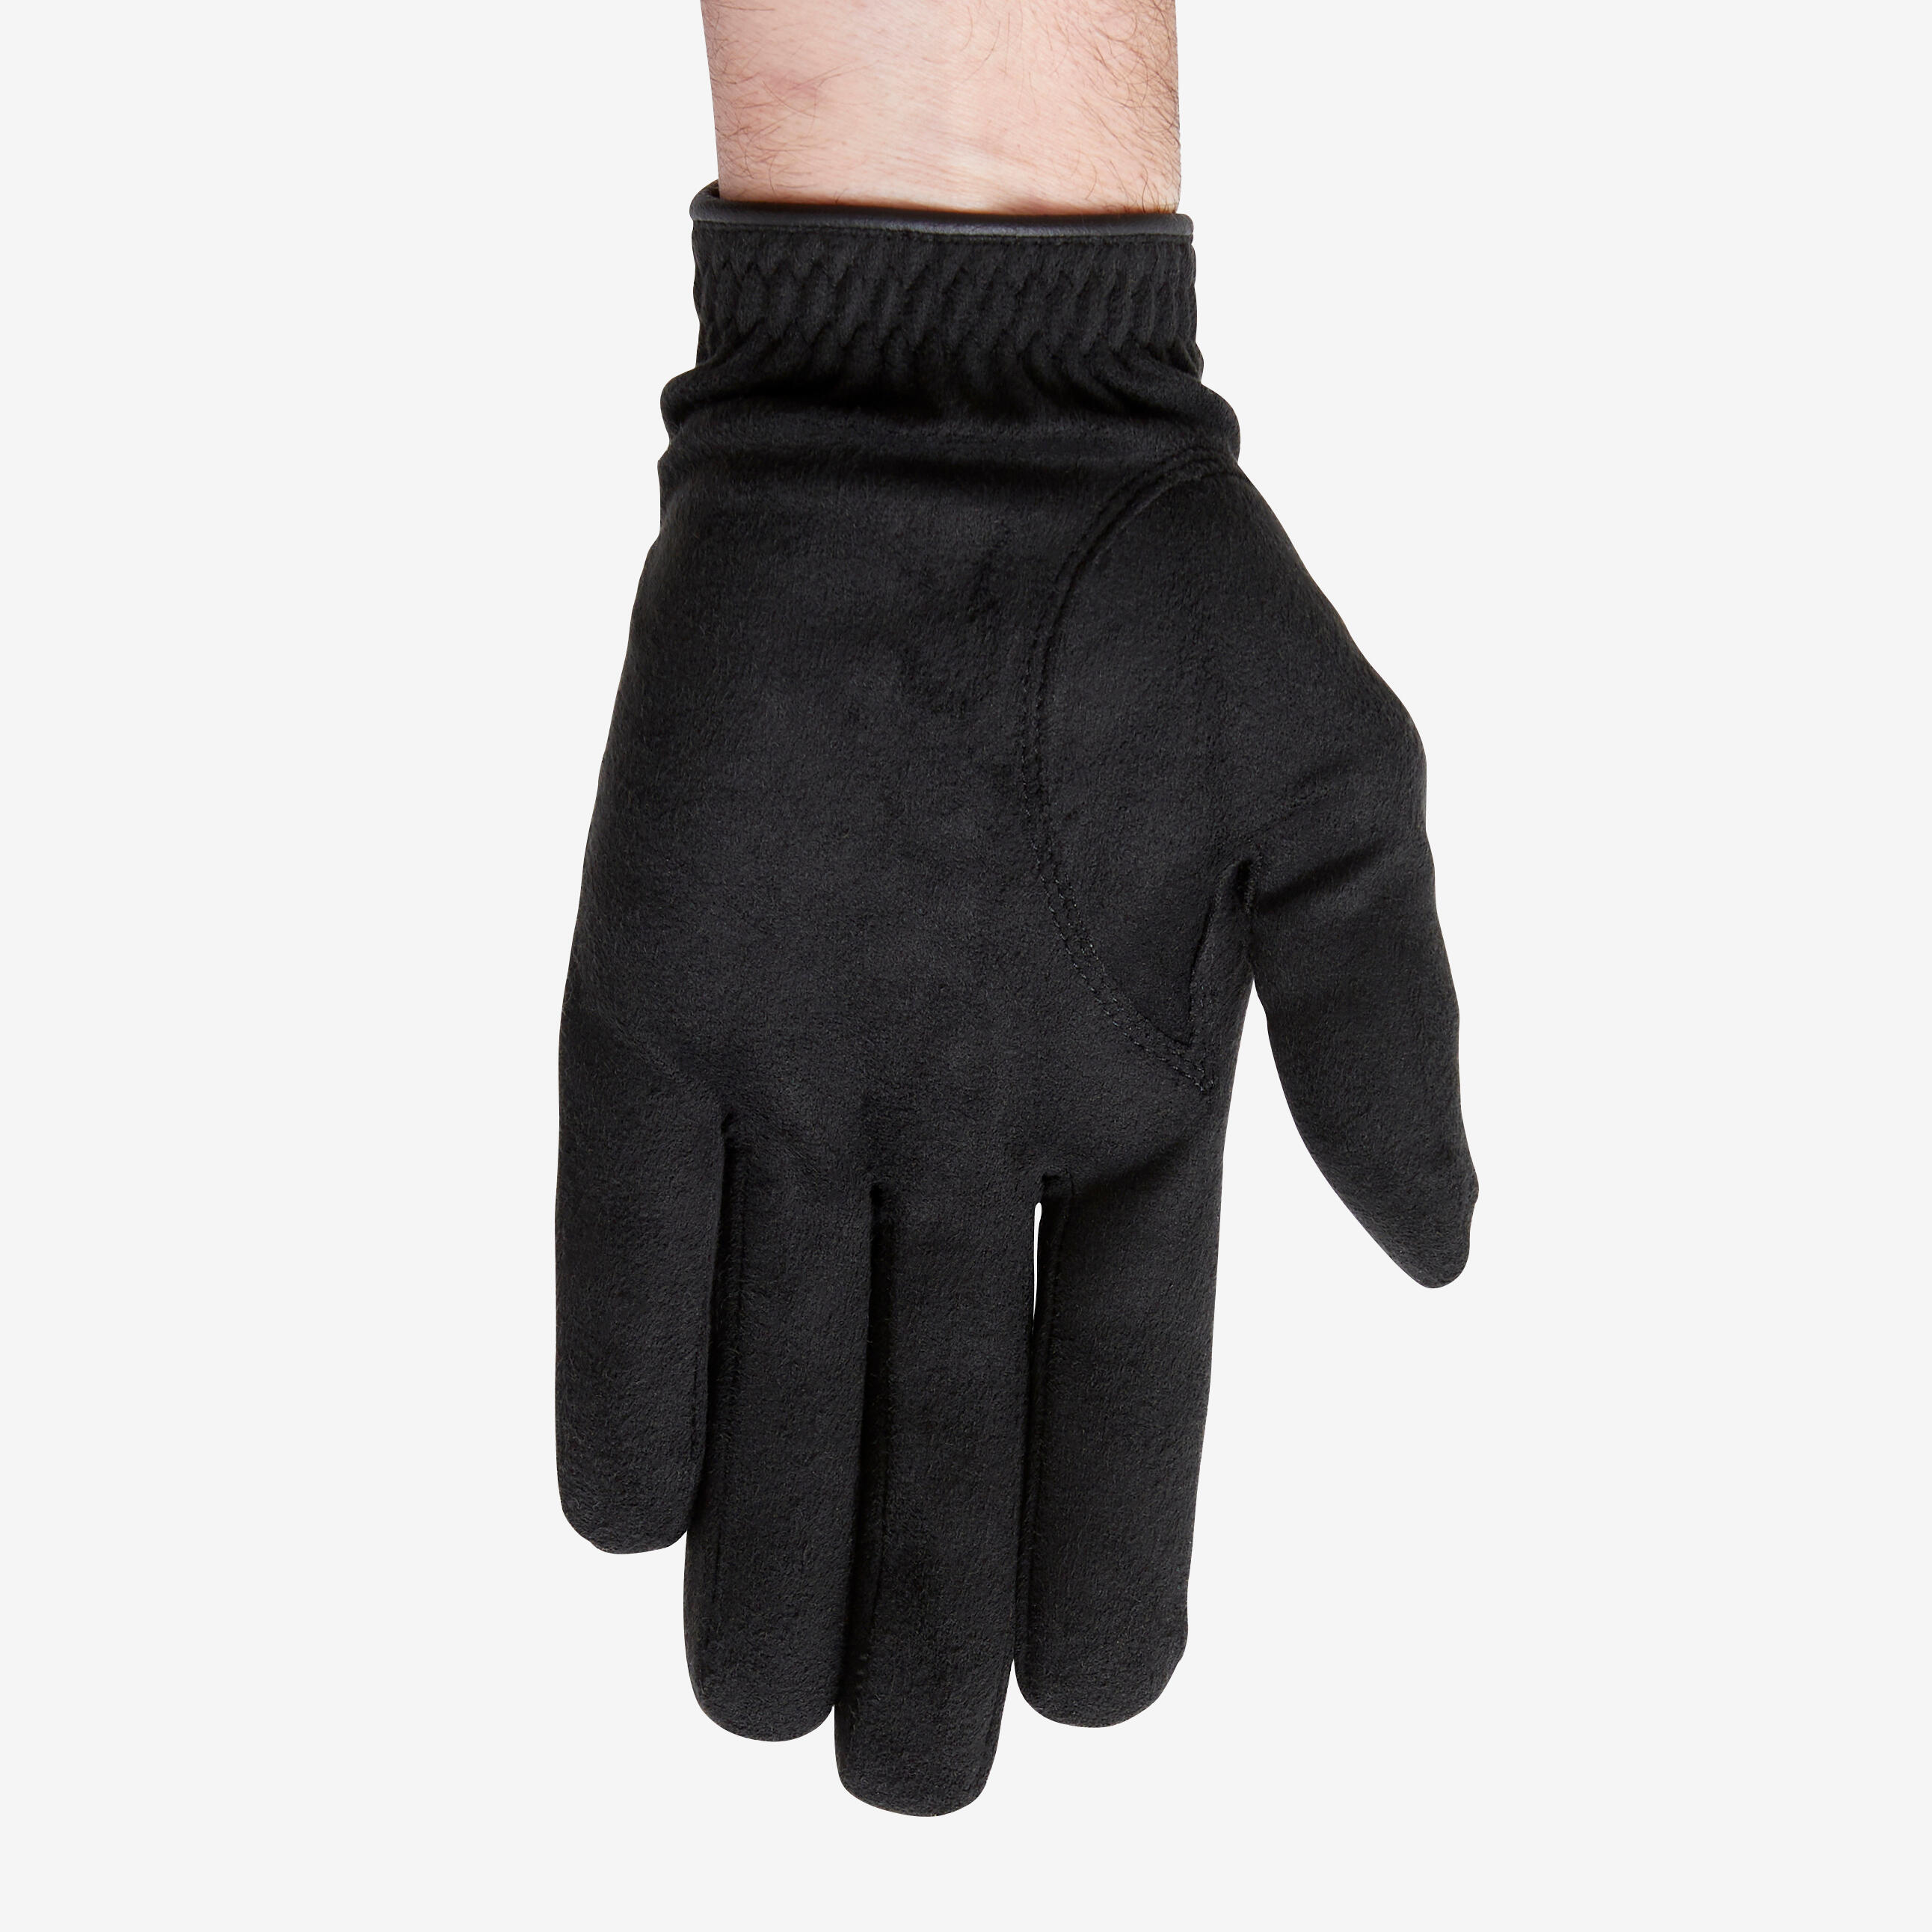 Men's pair of golf rain gloves - RW black 3/5